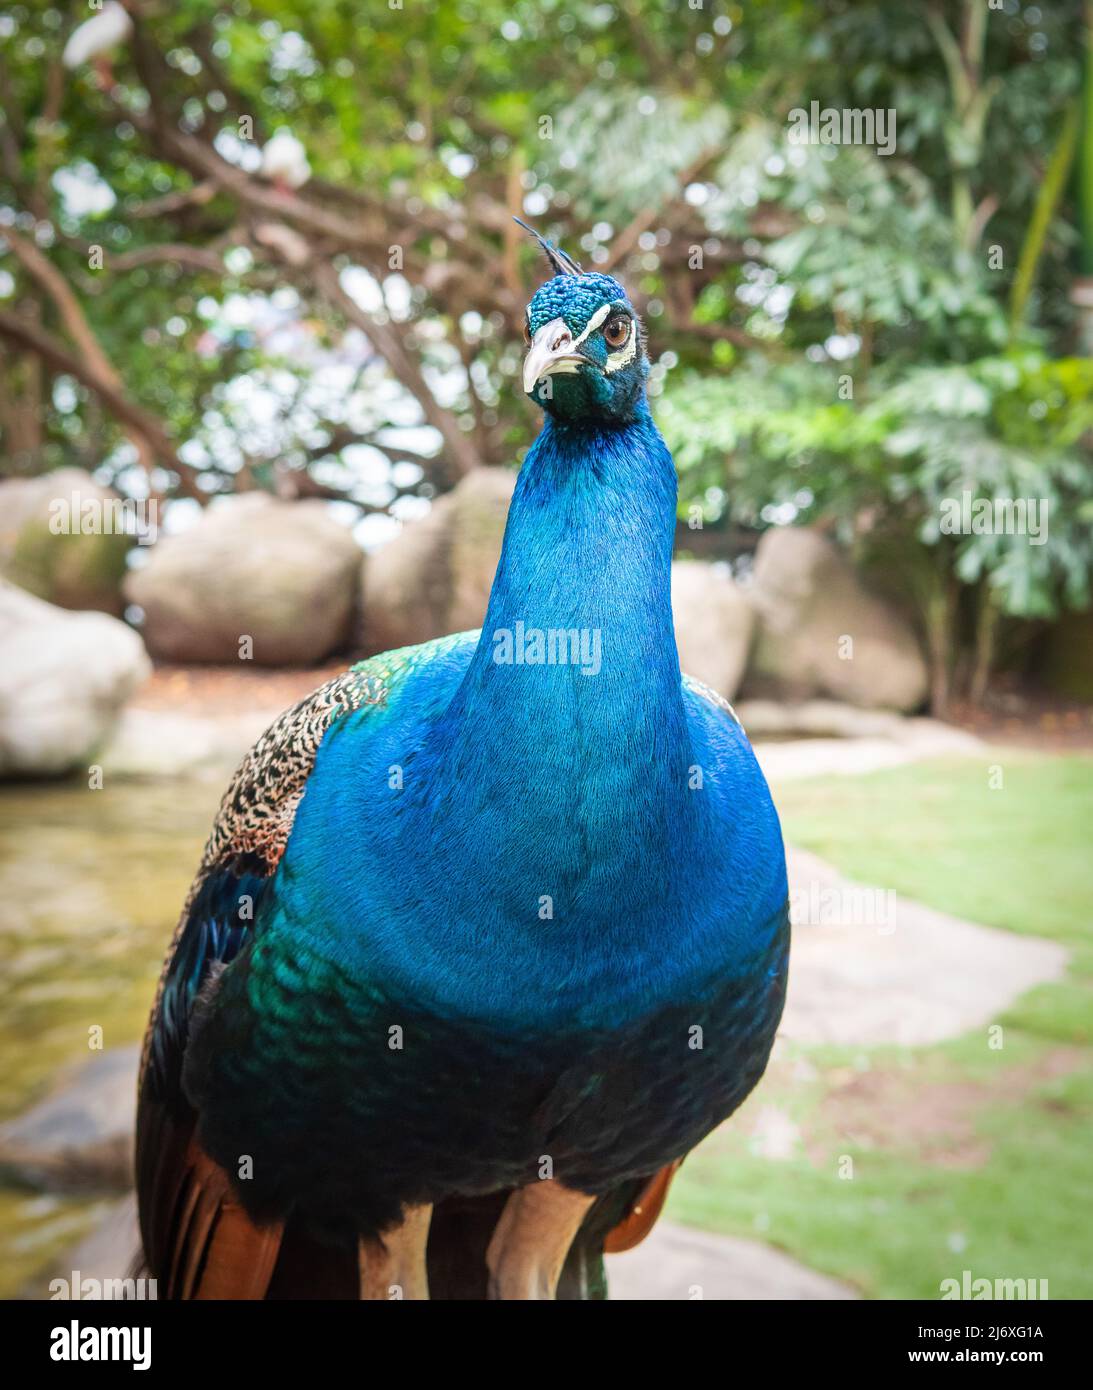 Retrato de un pavo real azul. Foto de stock